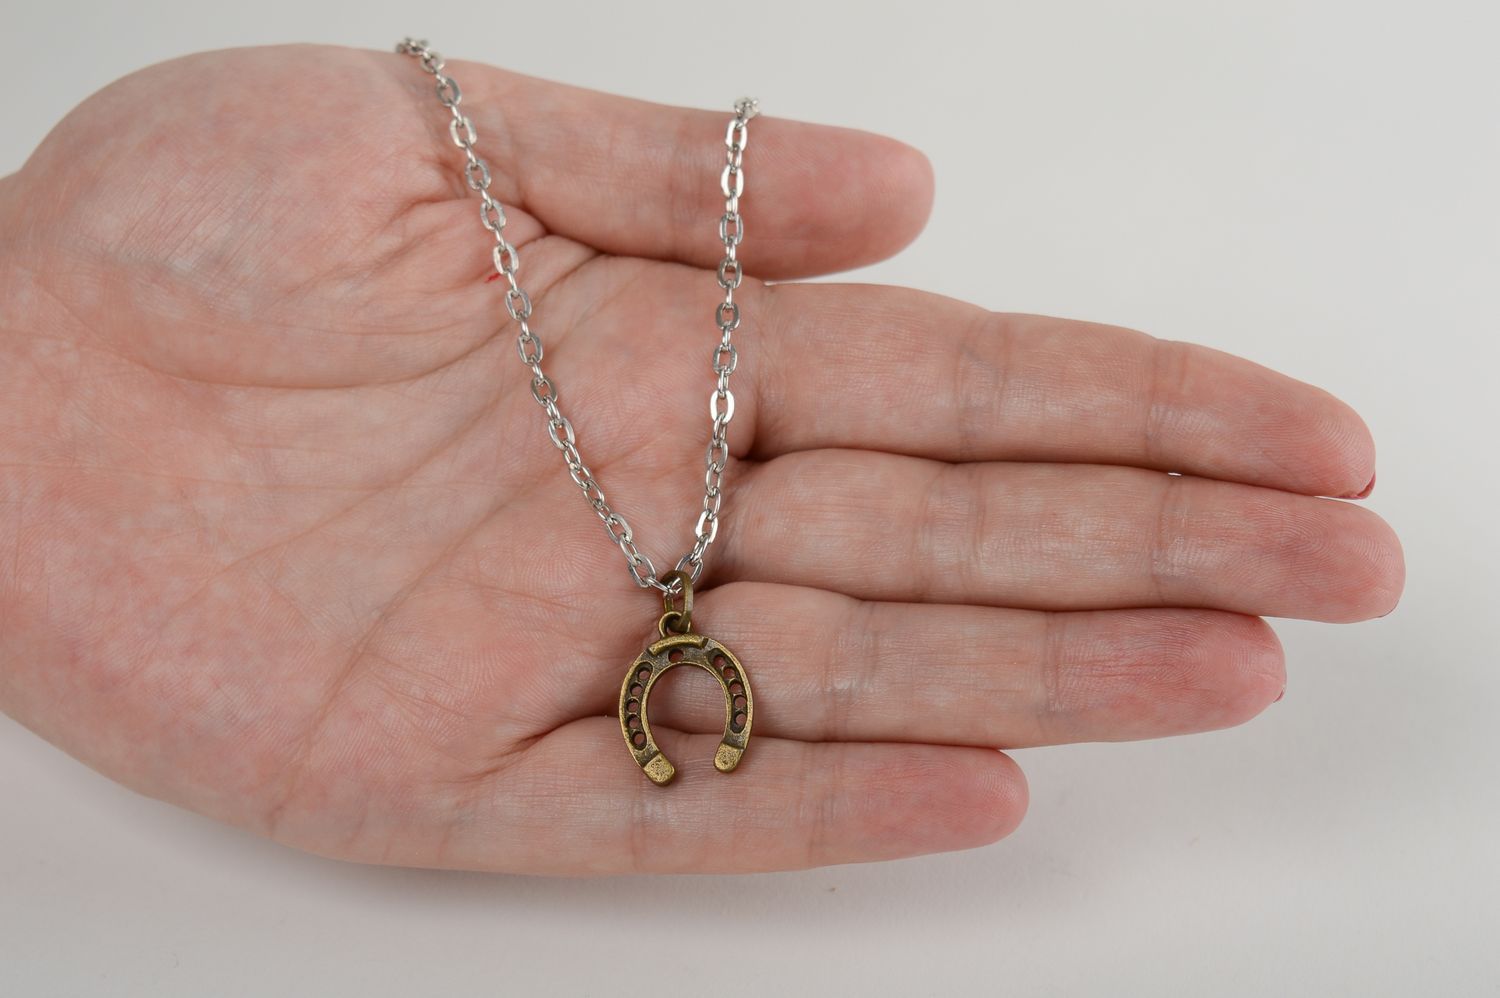 Handmade vintage pendant of chain metal pendant trendy accessories for men photo 5